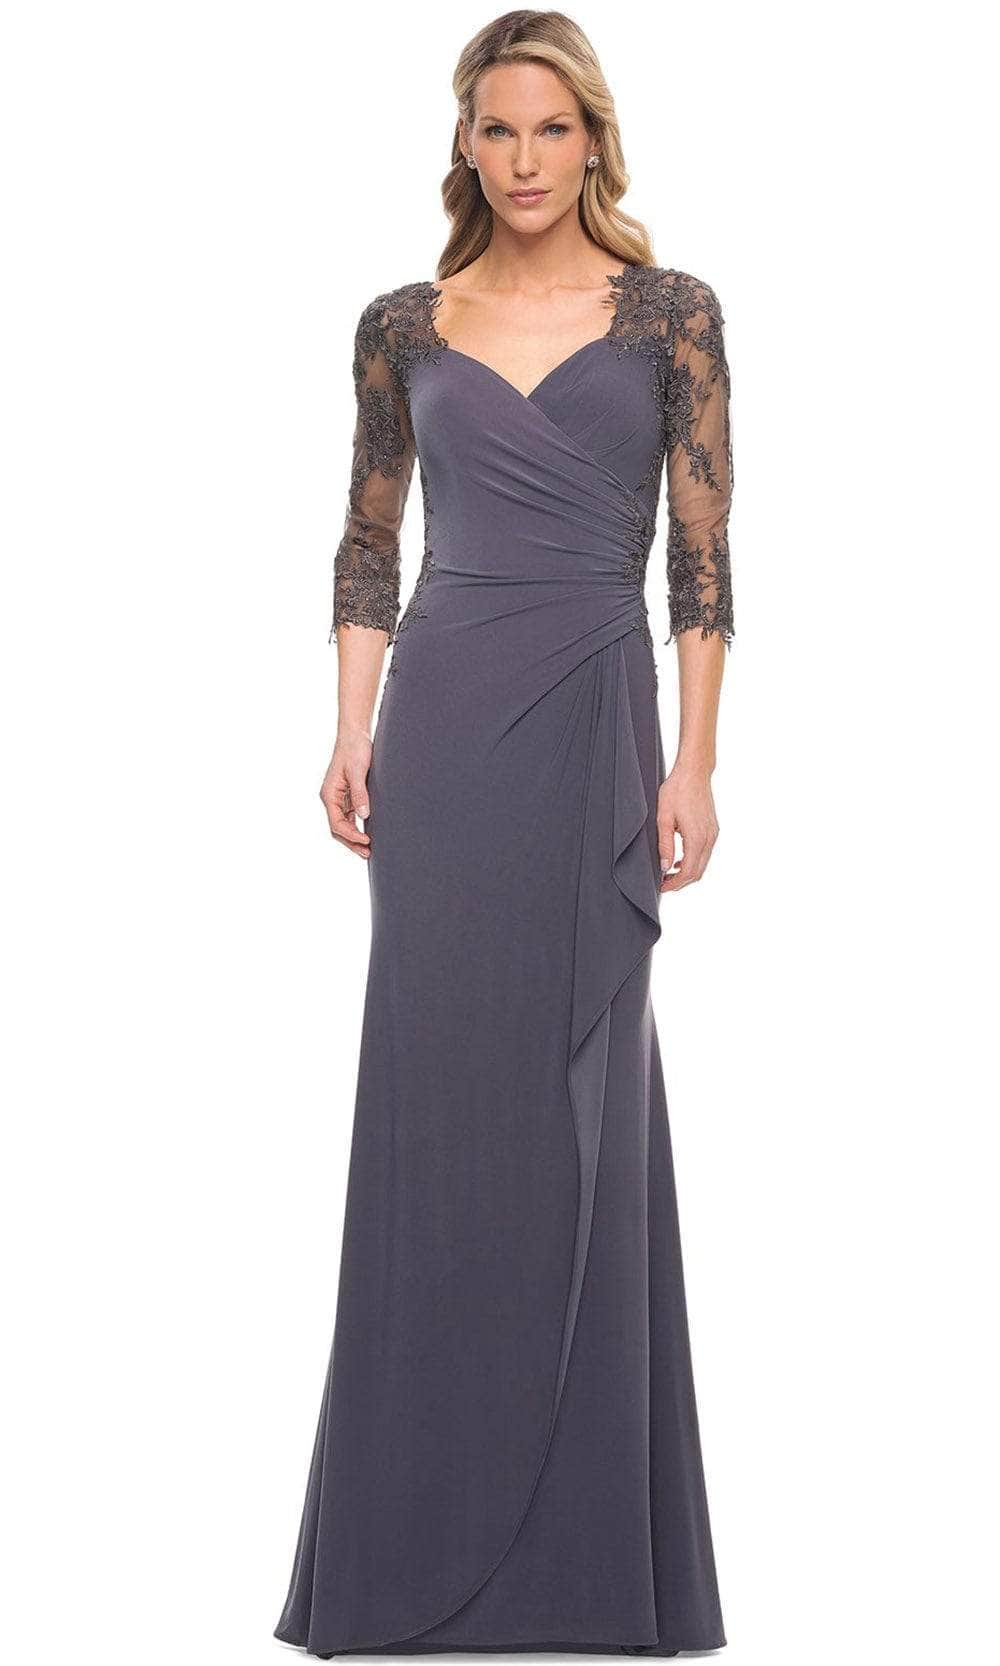 La Femme 30384 - Quarter Length Sleeve Sweetheart Neck Evening Gown Mother of the Bride Dresses 12 